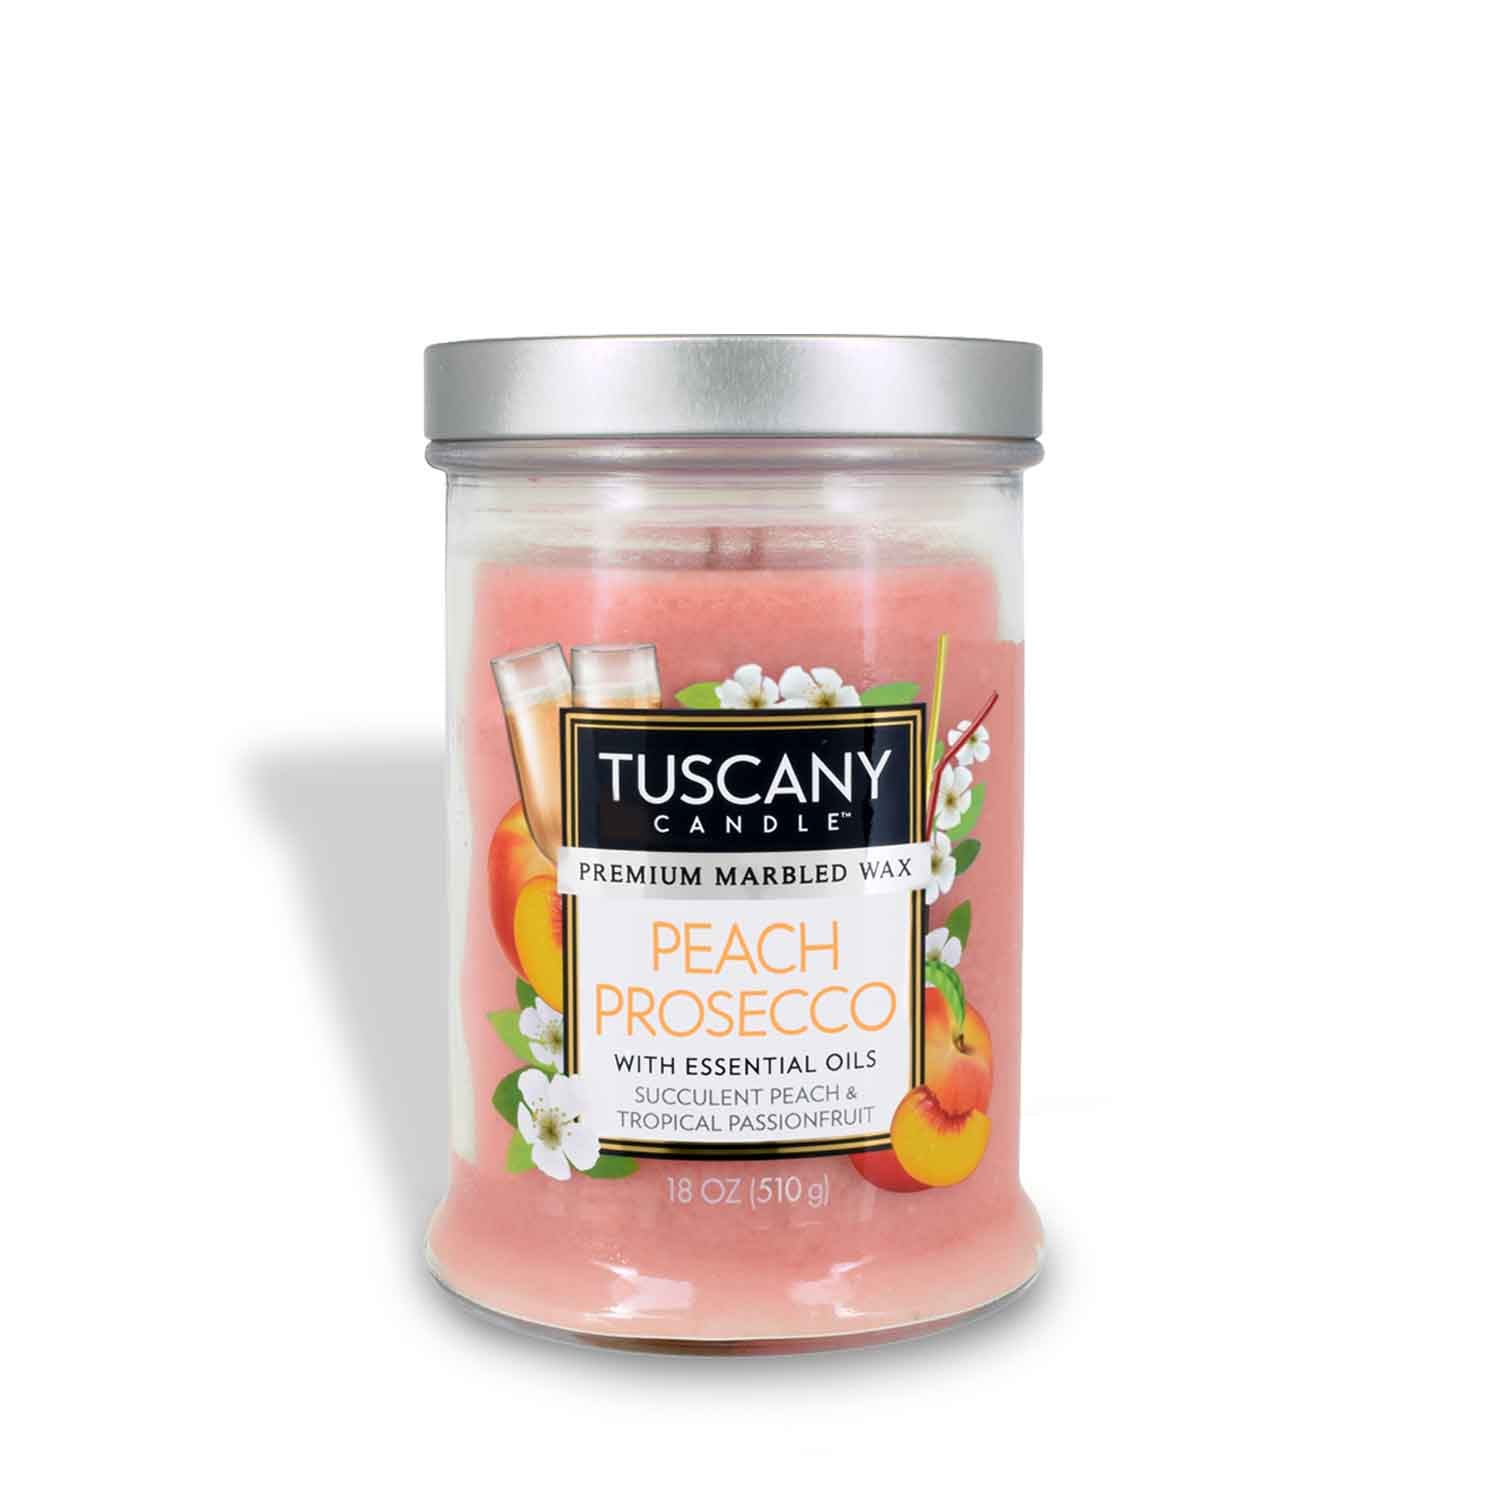 Peach Prosecco, a bellini fragranced scented candle